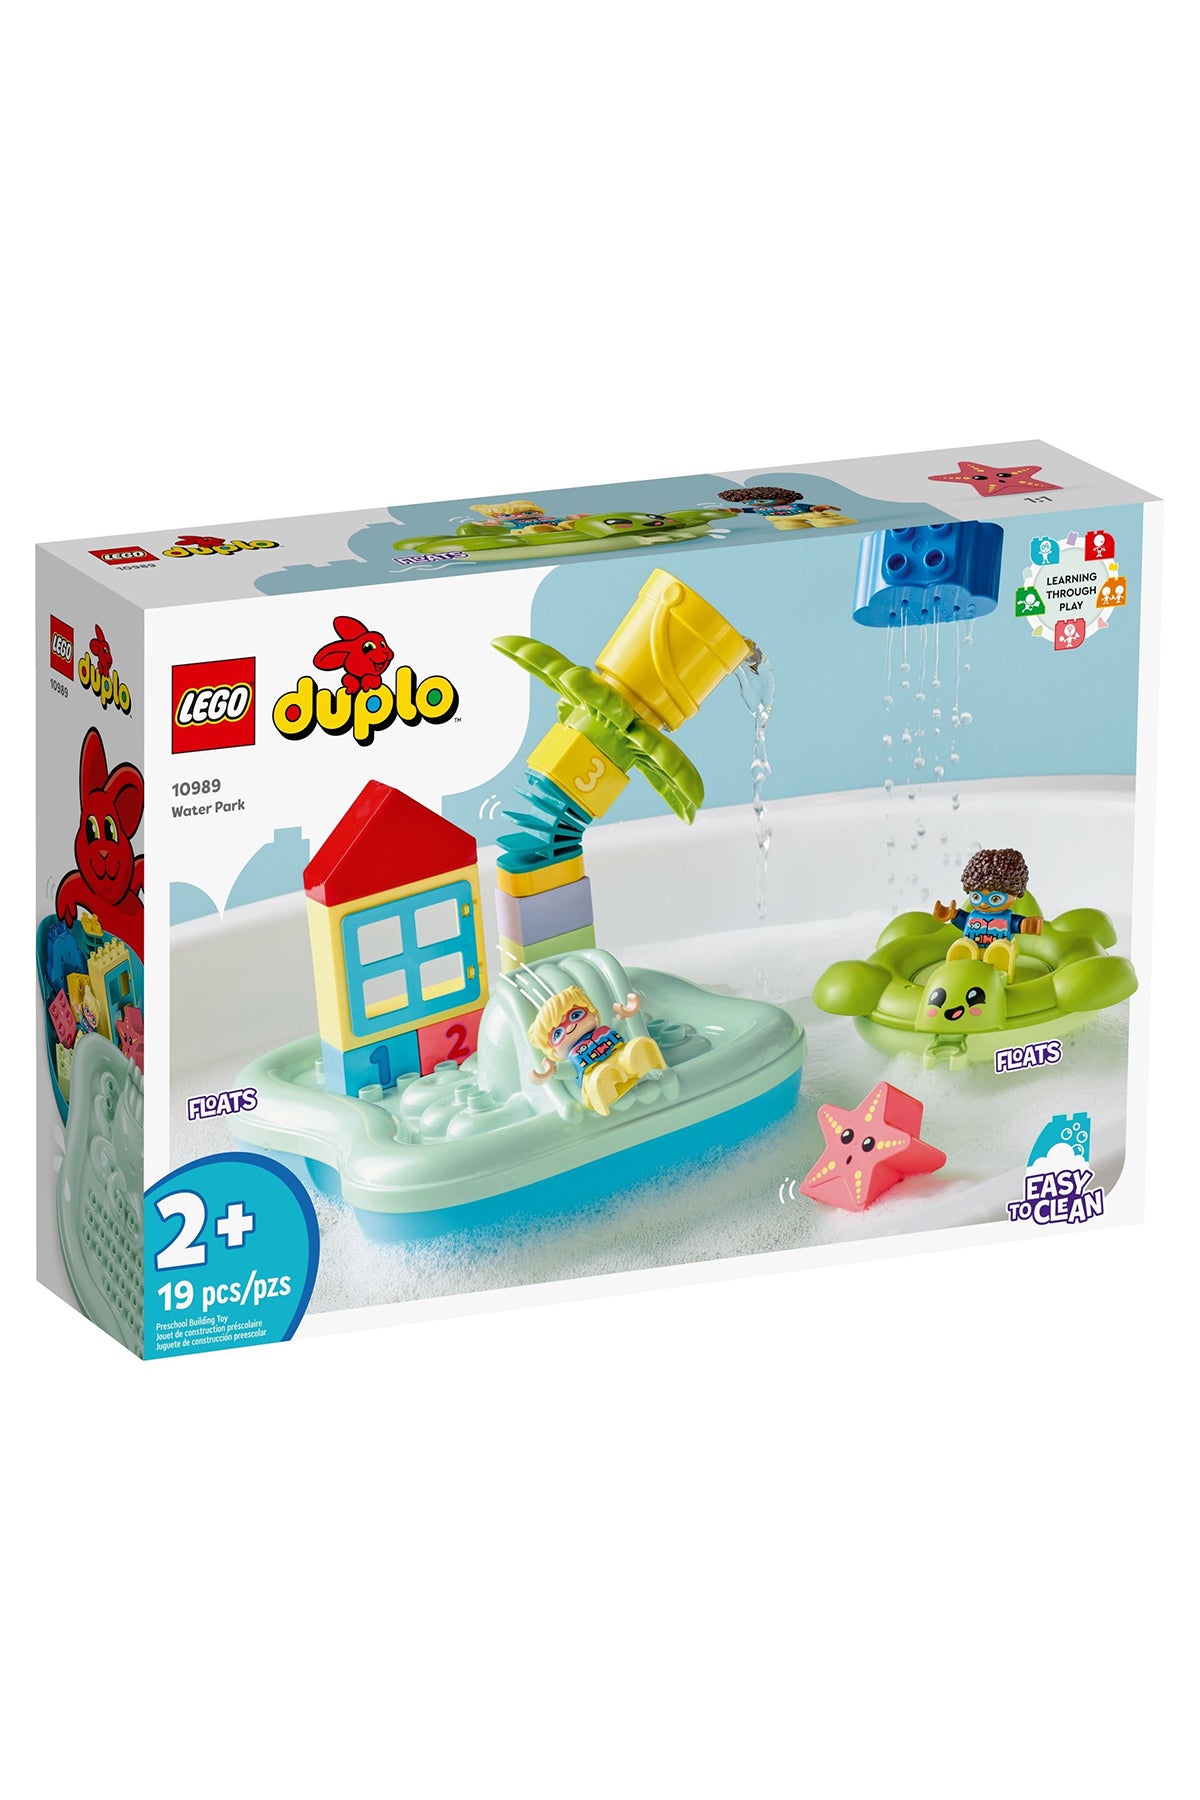 Lego Duplo : Water Park